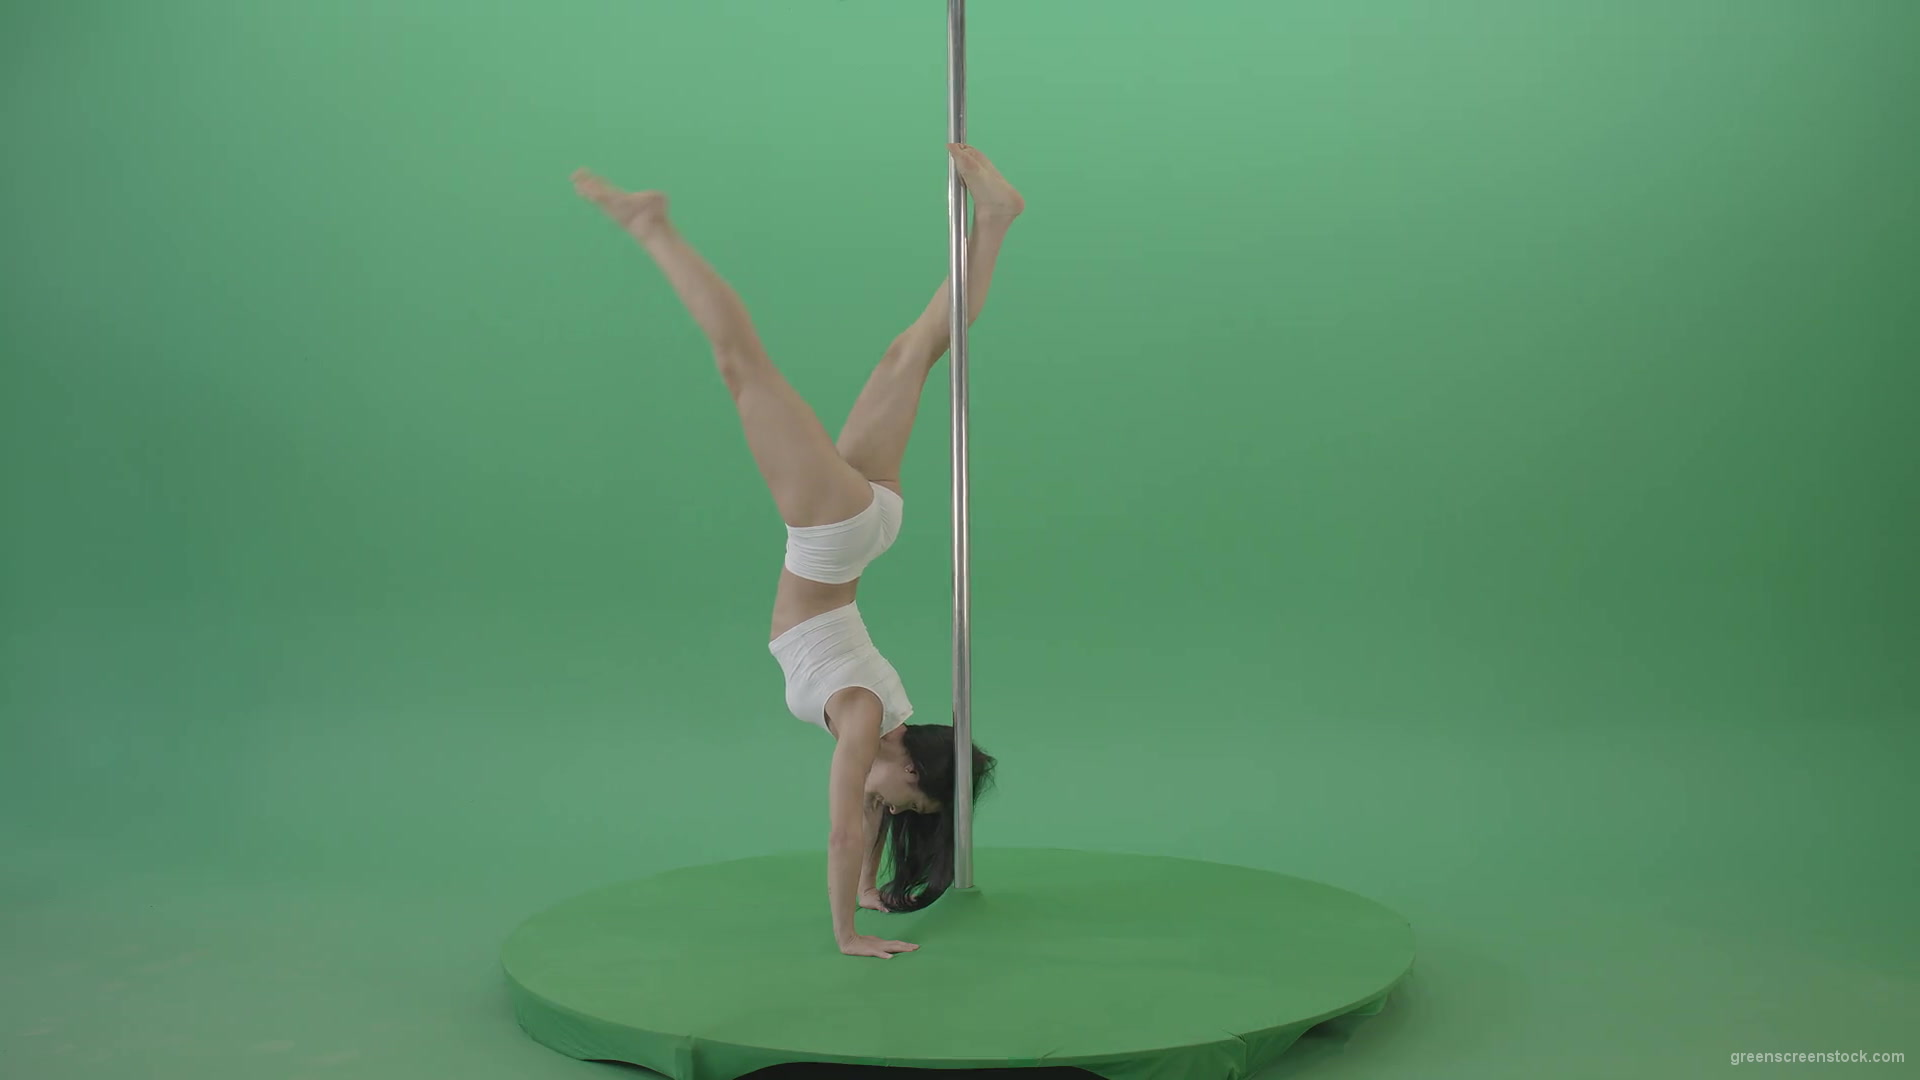 Fit-Girl-waving-legs-dancing-pole-dance-on-green-screen-4K-Video-Footage-1920_006 Green Screen Stock